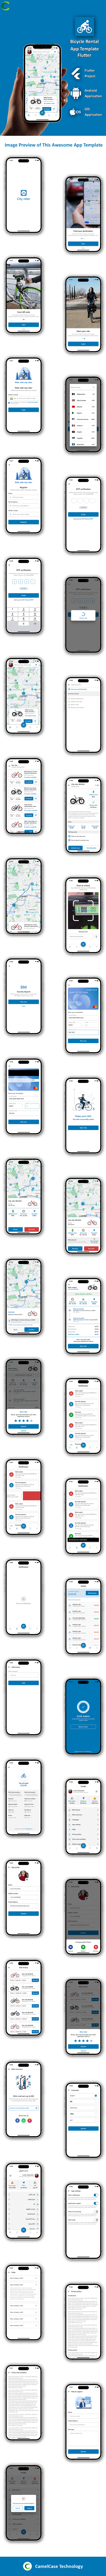 Bicycle Rental App Template in Flutter | CityRider | Multi Language - 7